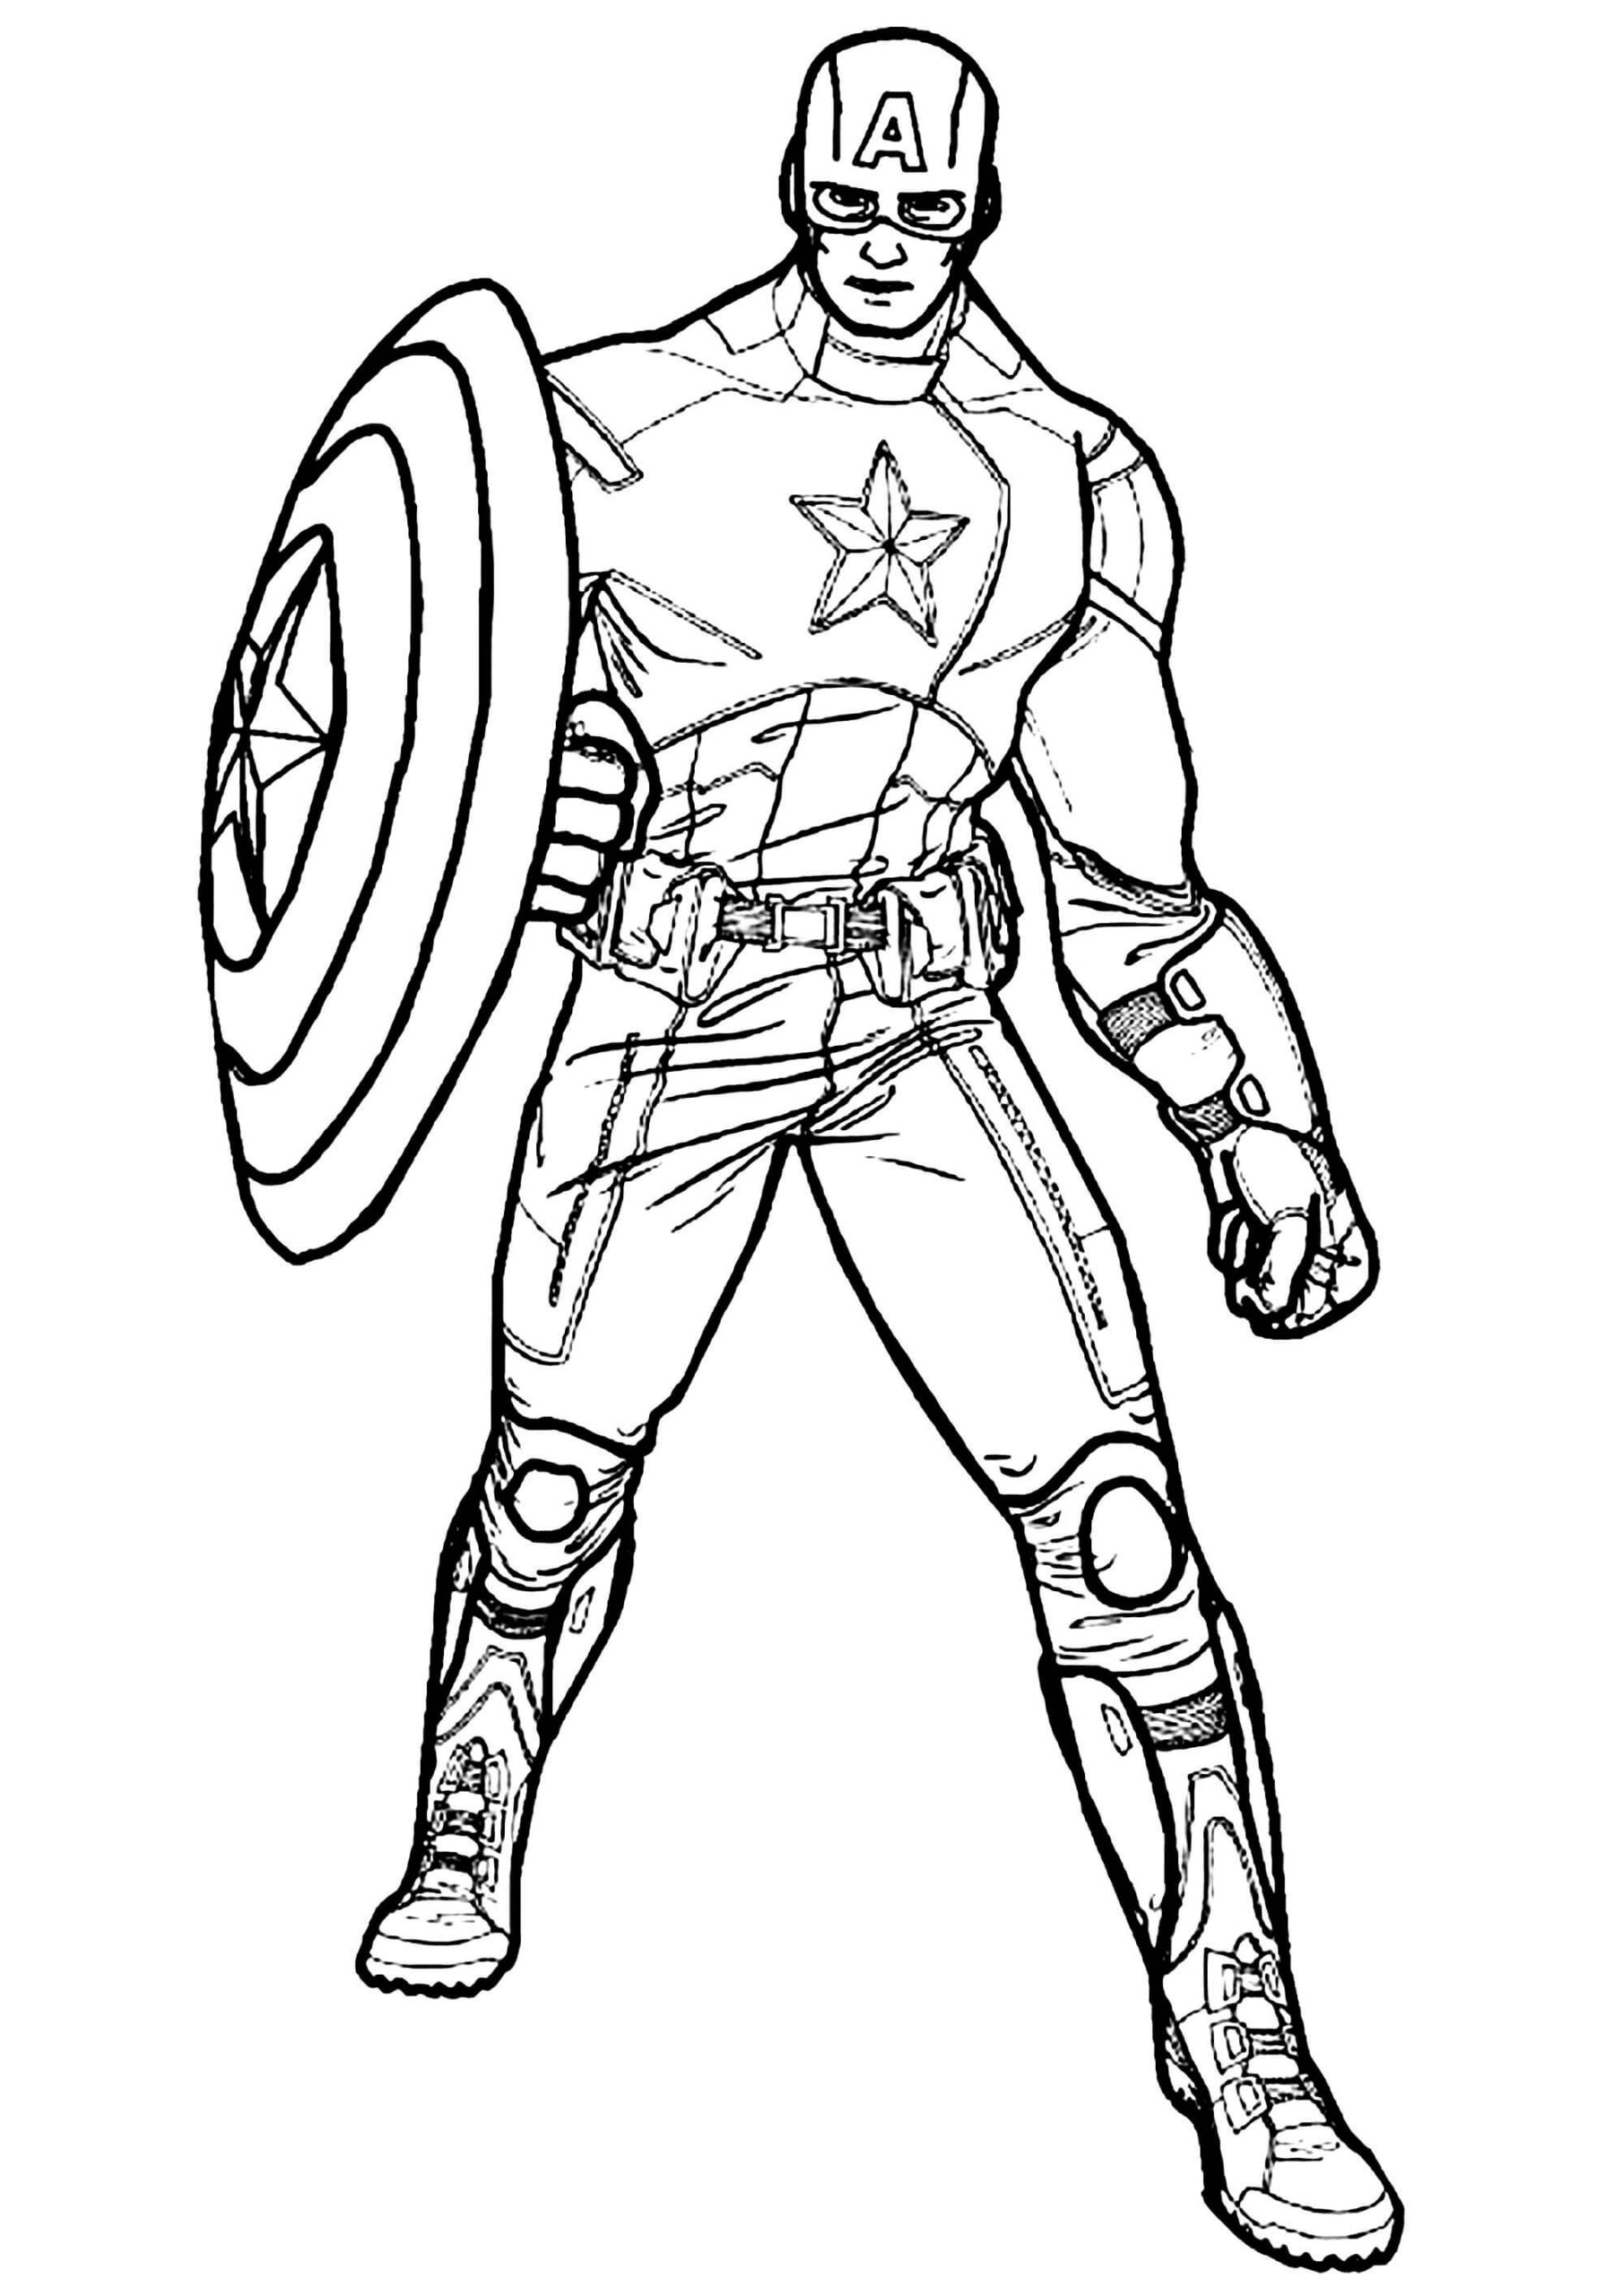 Genial Capitán América para colorear imprimir e dibujar ColoringOnly Com